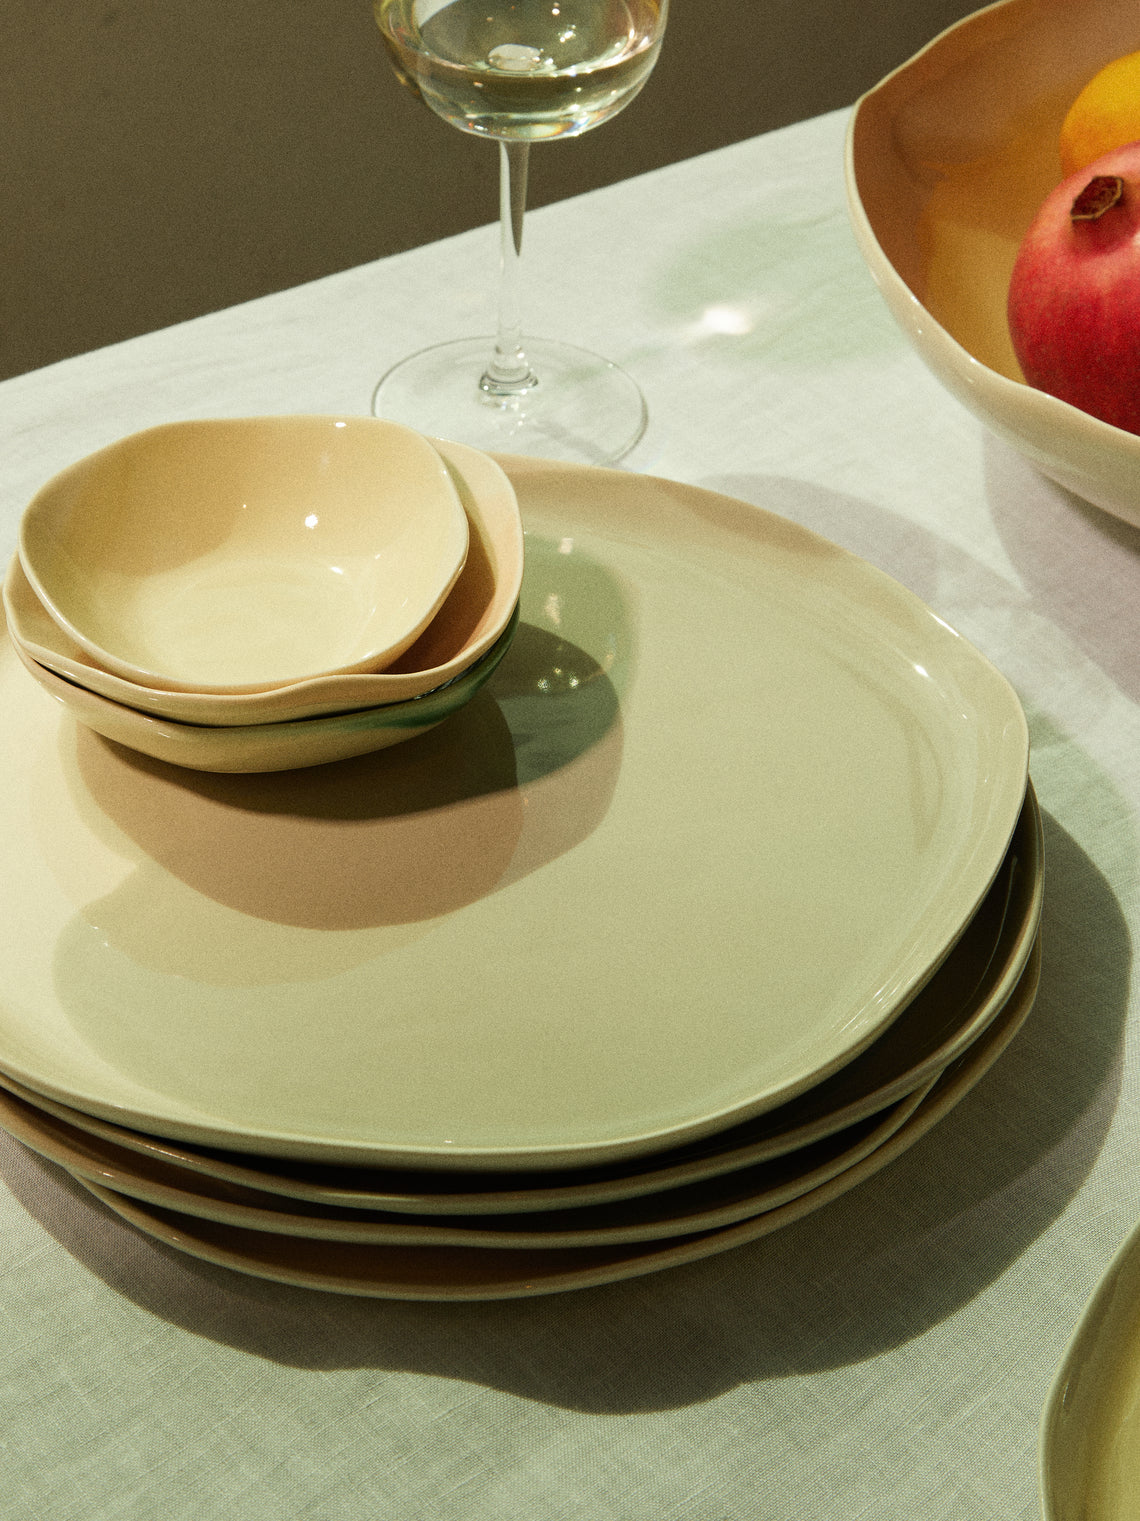 Pottery & Poetry - Hand-Glazed Porcelain Dinner Plates (Set of 4) - Grey - ABASK